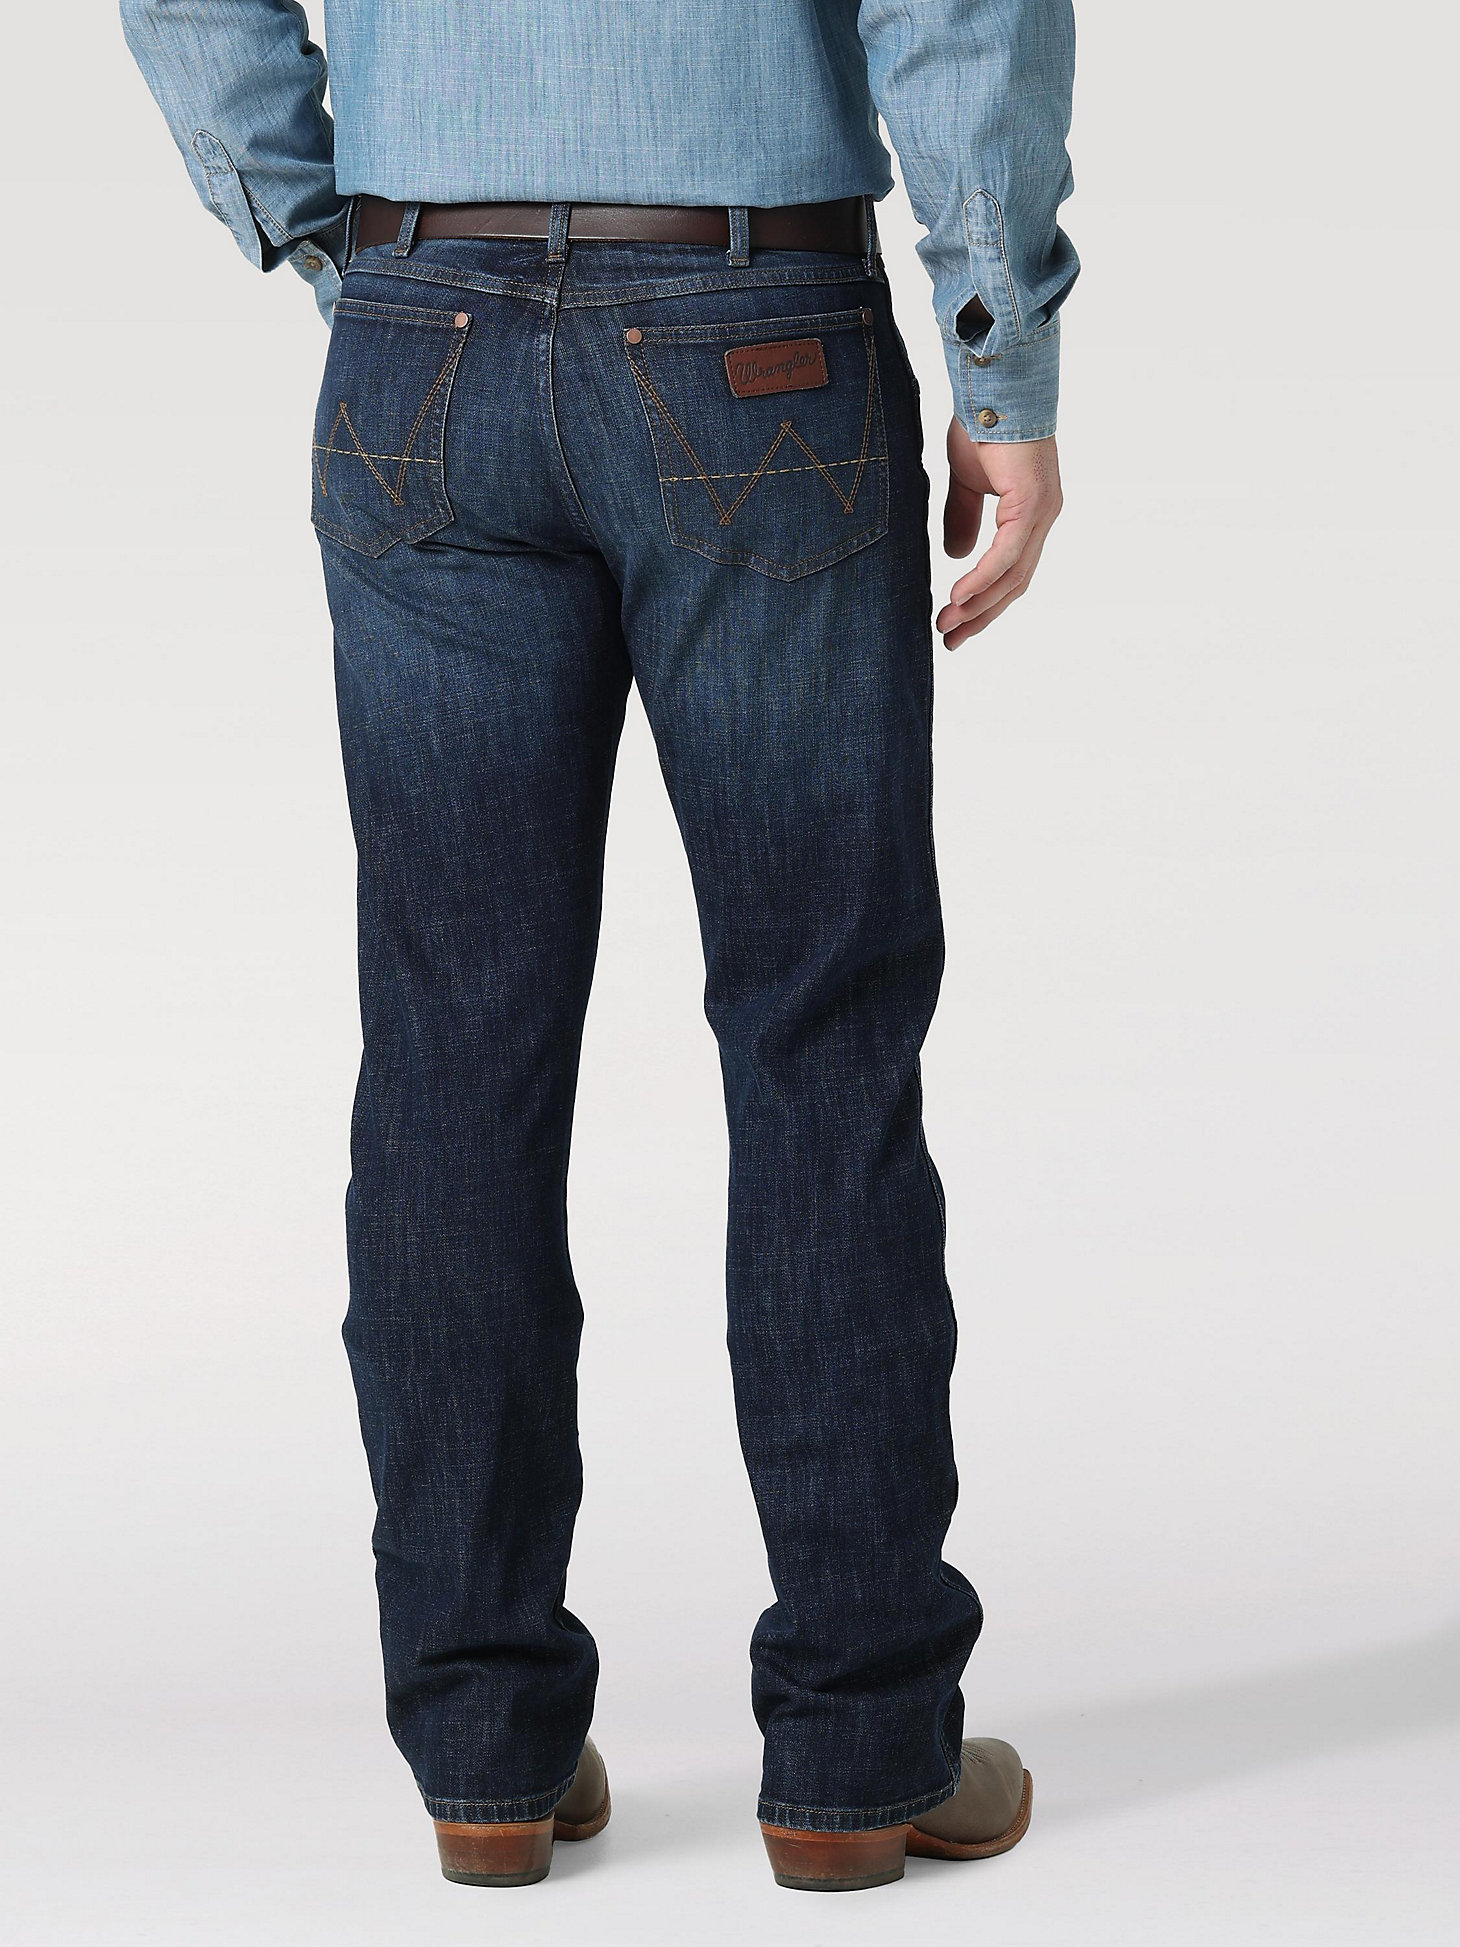 Men's Wrangler Retro® Slim Fit Bootcut Jean in Merriam alternative view 2